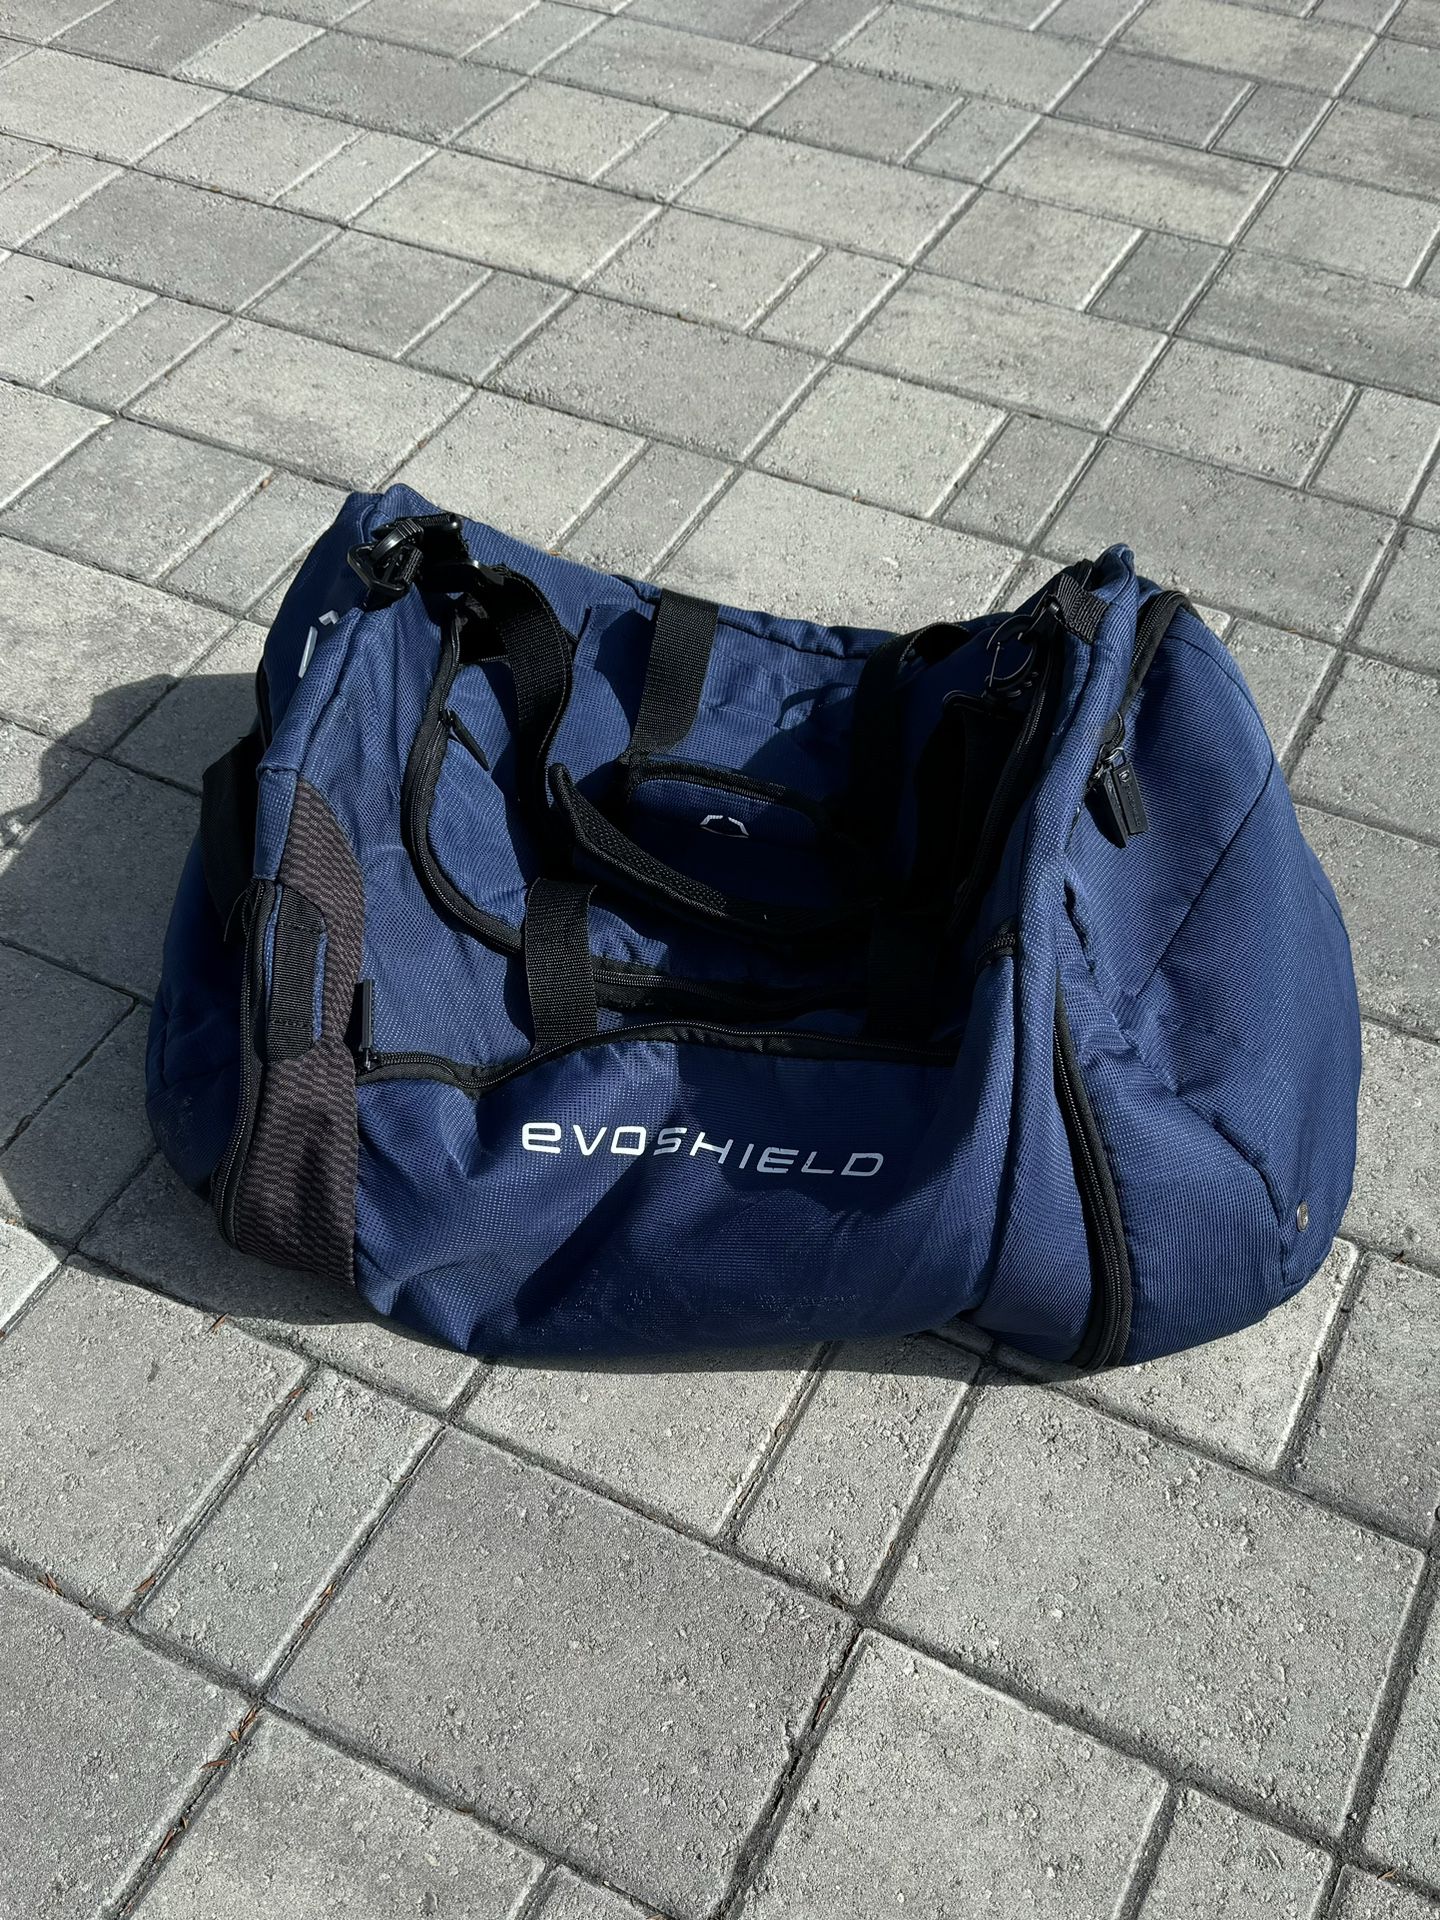 Evoshield Players Duffle Bag 